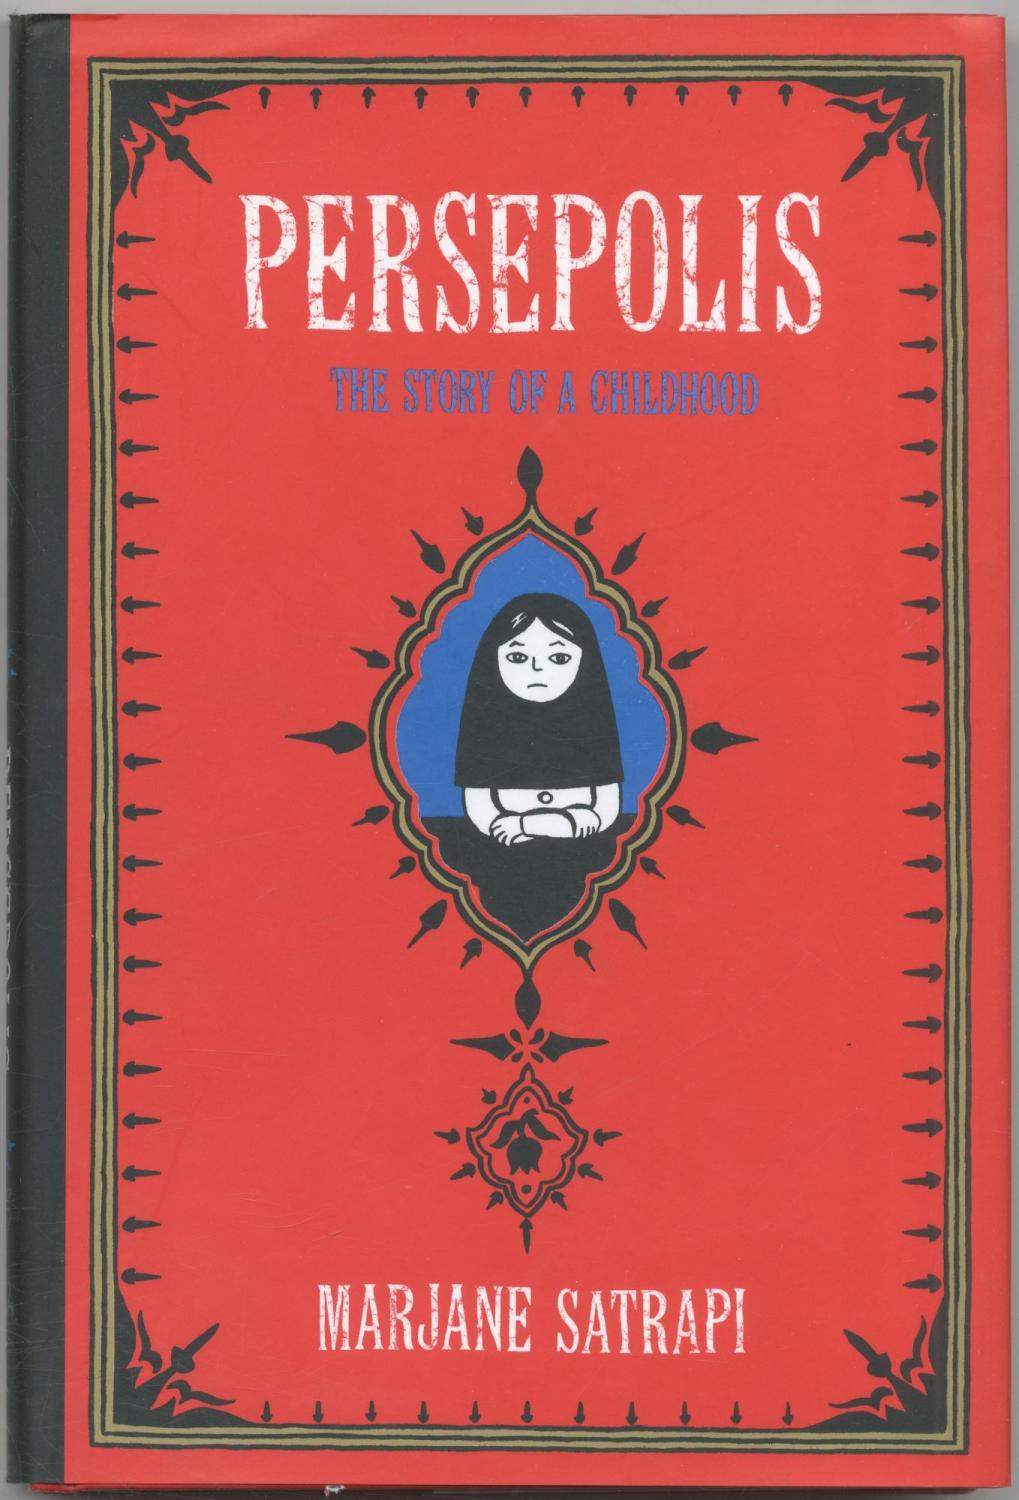 Persepolis: The Story of a Childhood - SATRAPI, Marjane